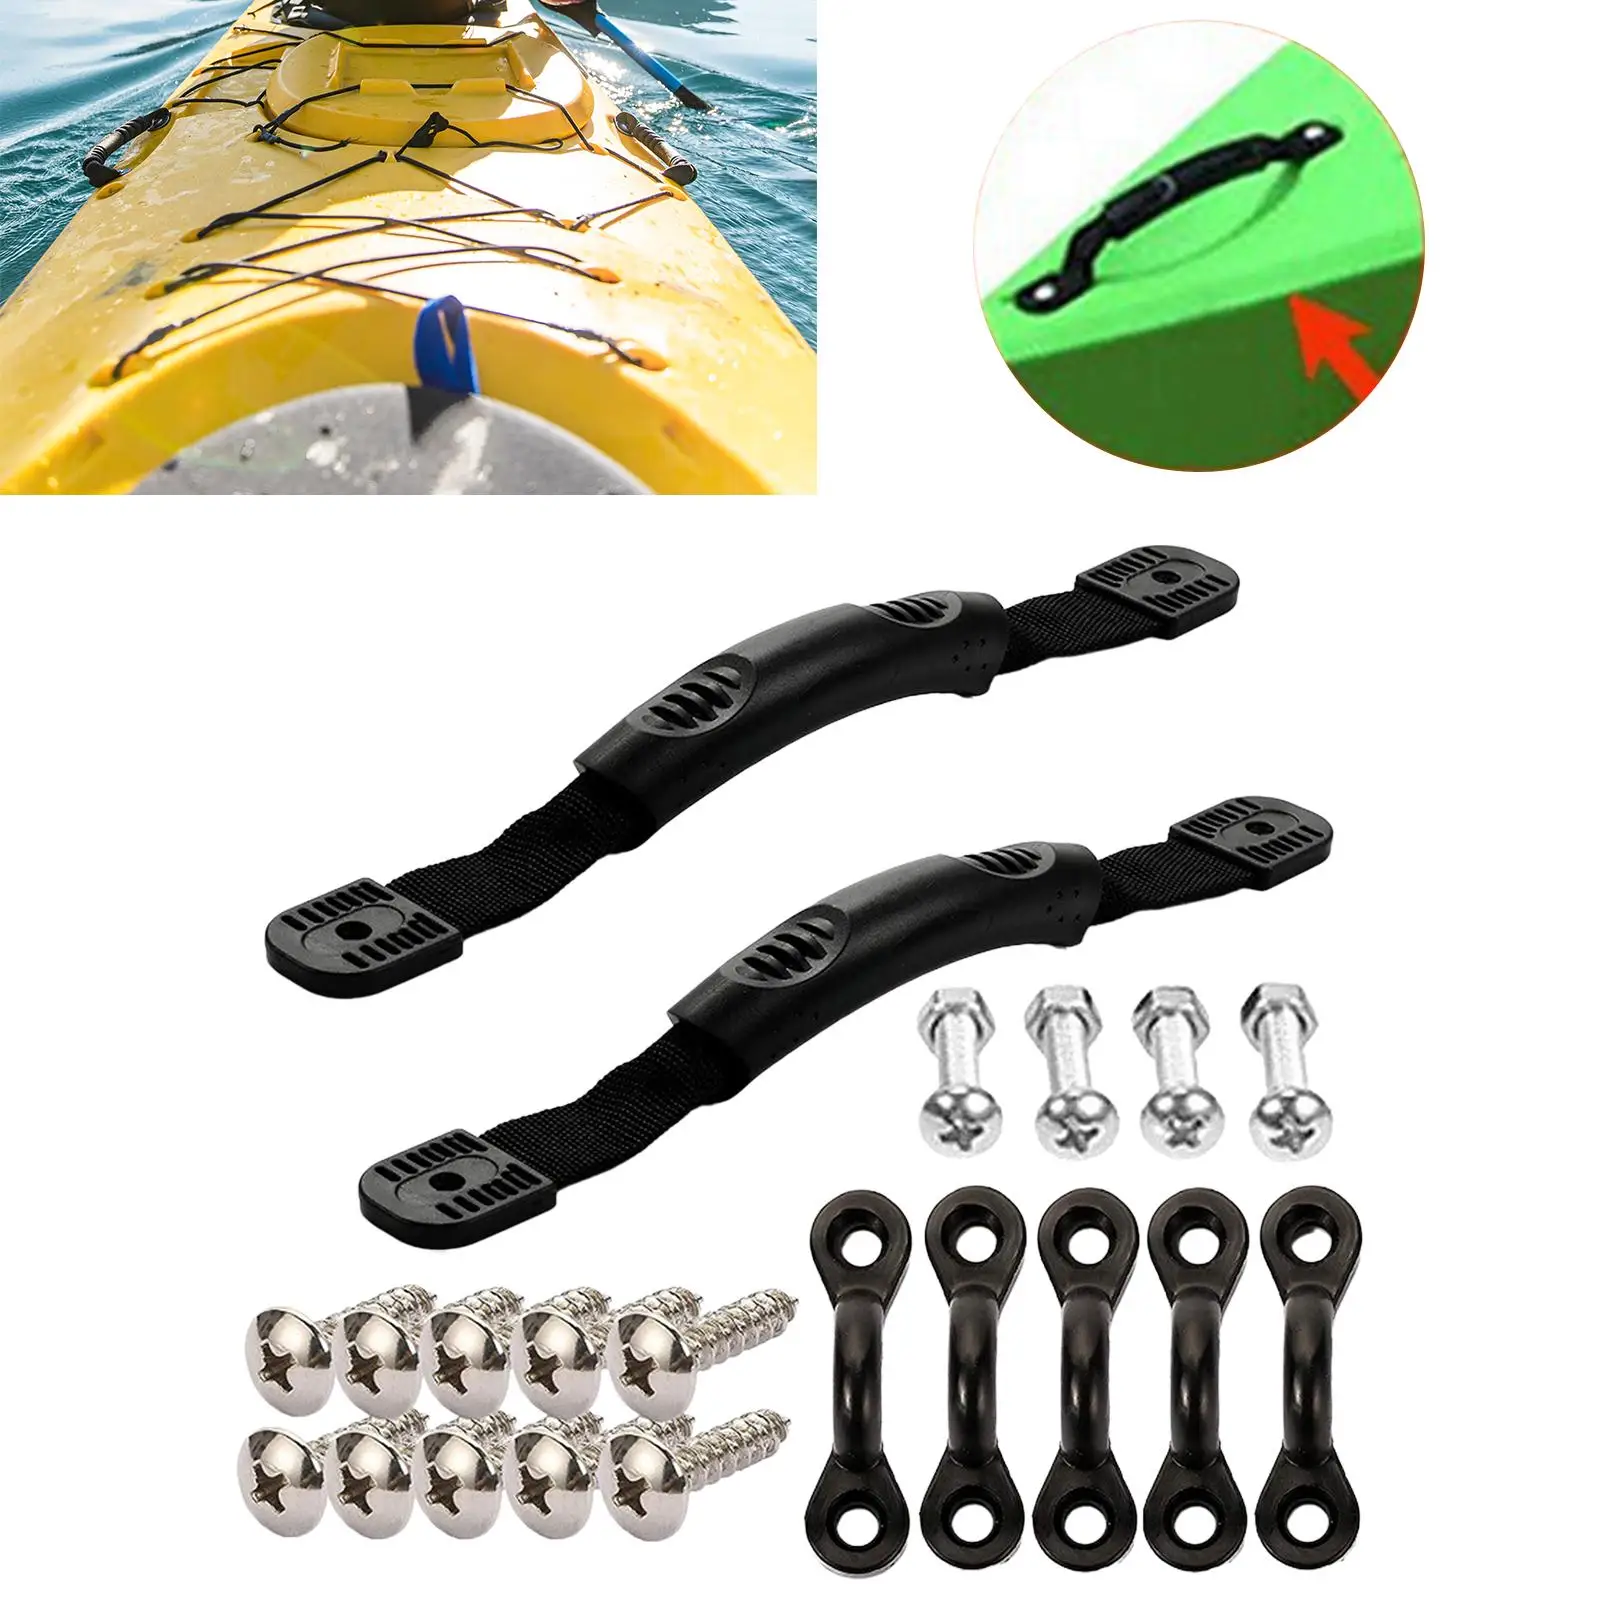 Kayak Canoe Carry Handles Durable Comfortable Gripping with Screws Kayak Carry Handles for Kayak Accessories Canoes Boats Kayaks